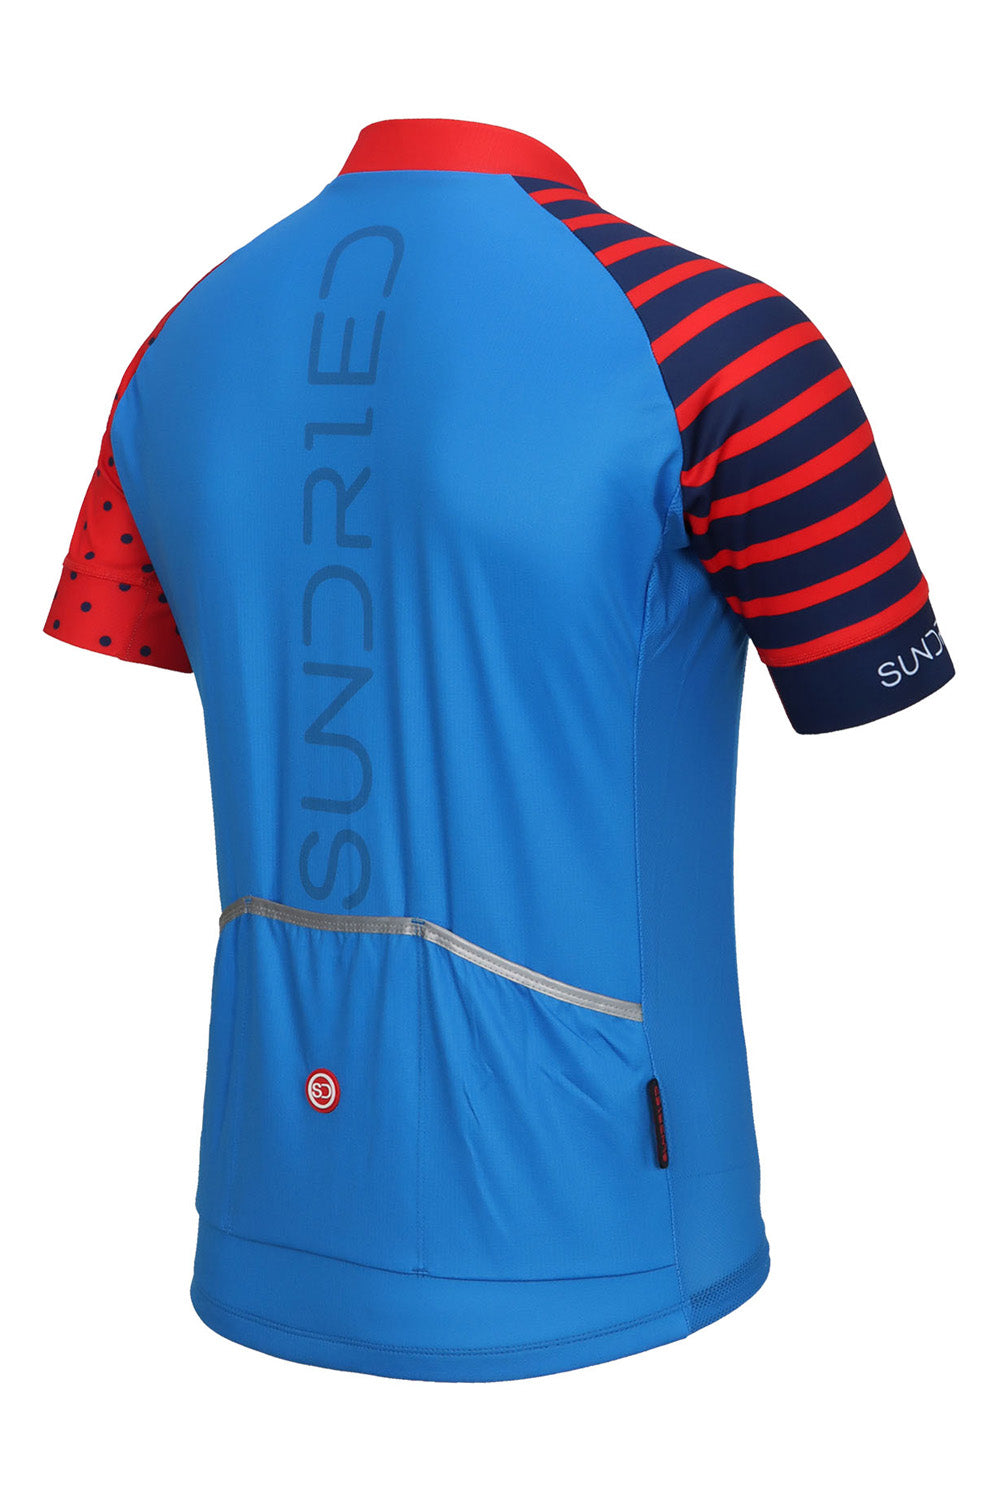 Deko Cycling Jersey Mens Short Sky Blue/Red